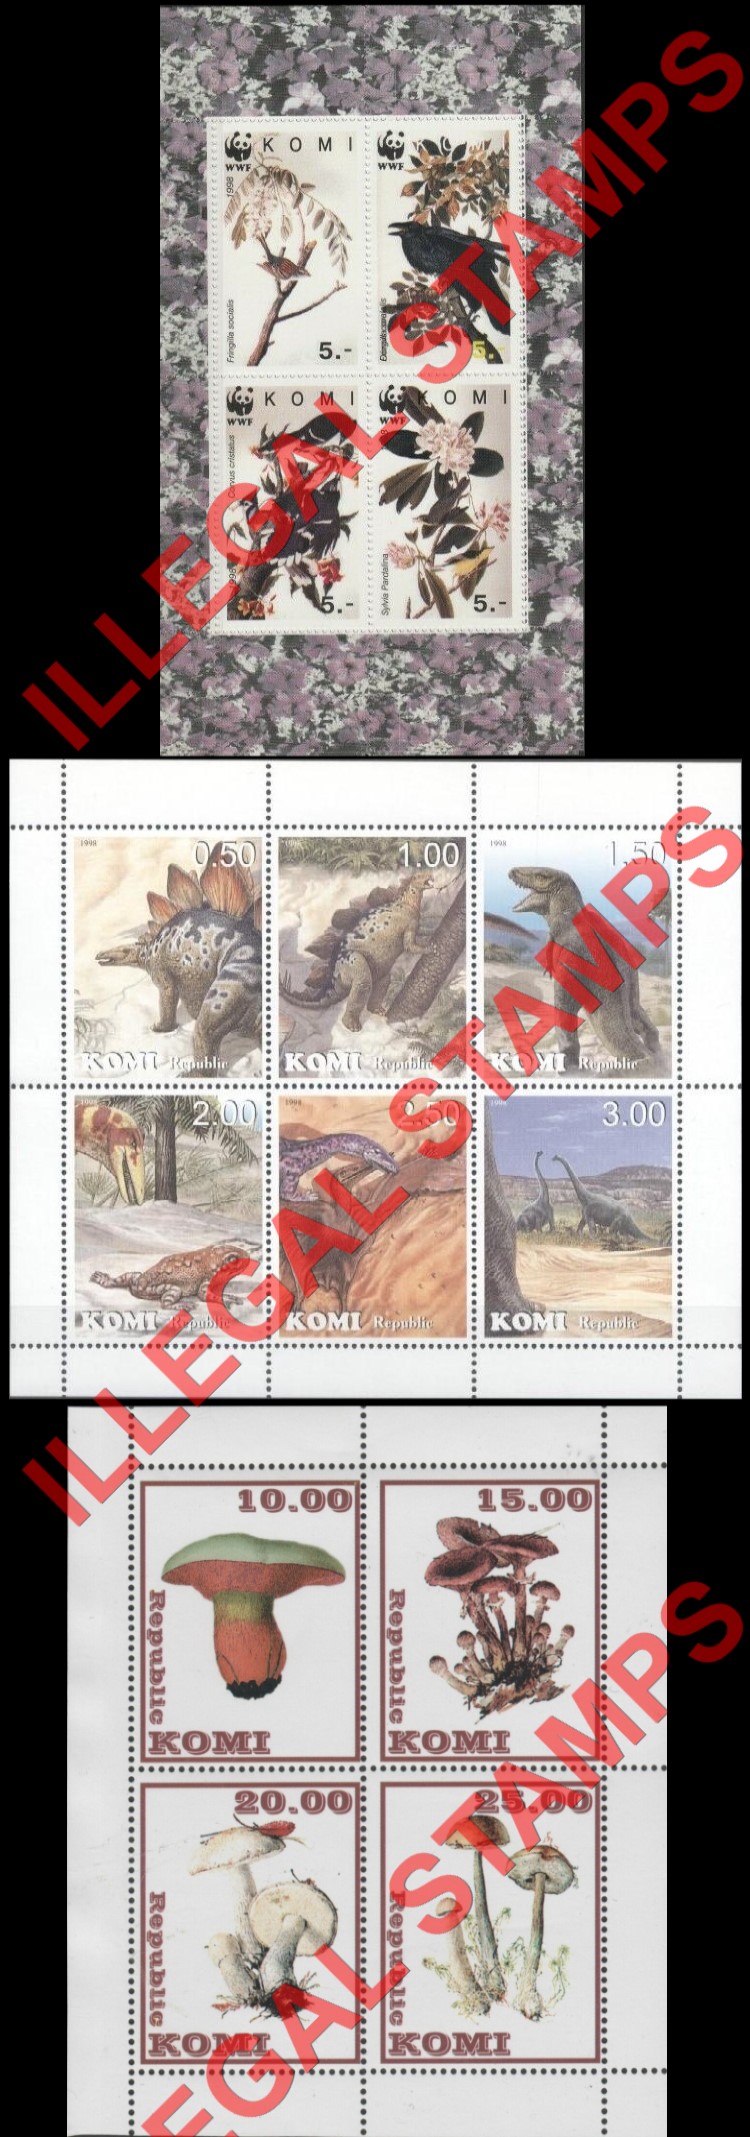 Komi Republic 1998 Counterfeit Illegal Stamps (Part 2)